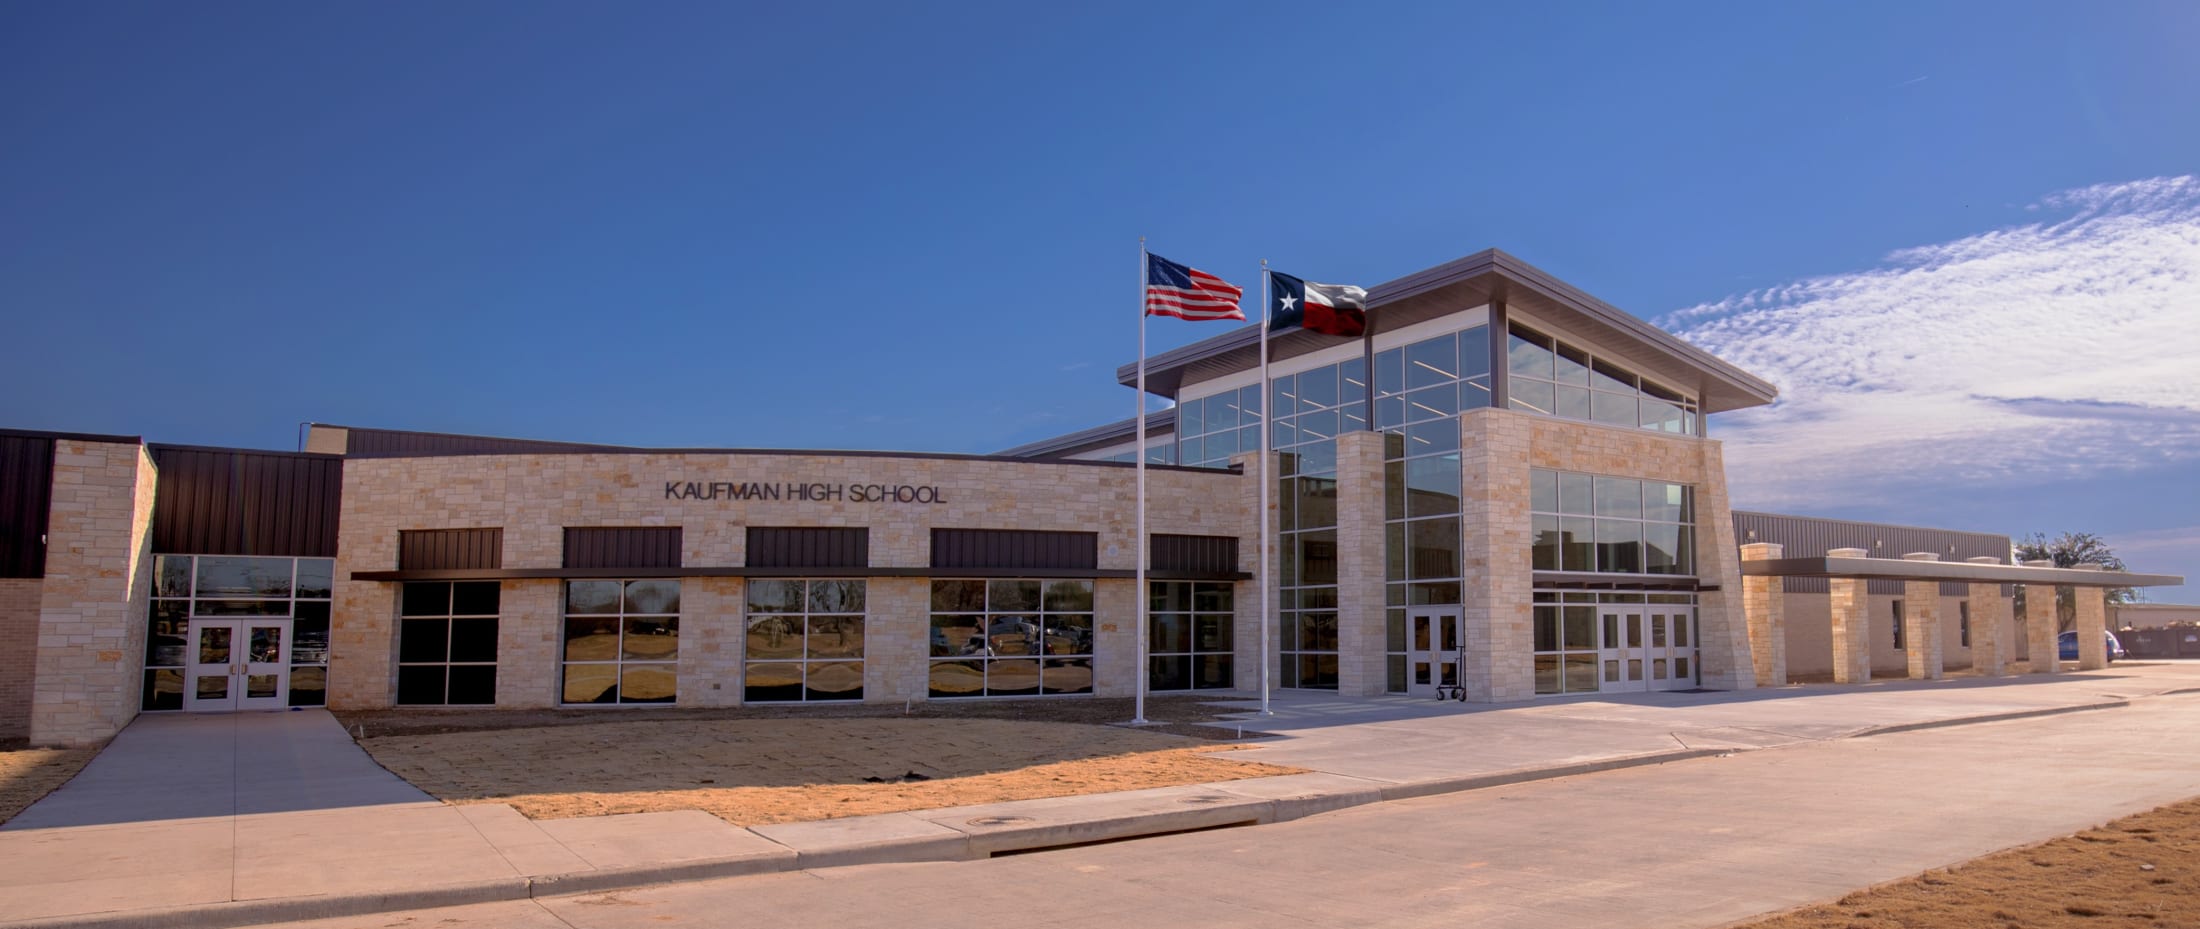 Kaufman High School receives Threat, Closes Friday